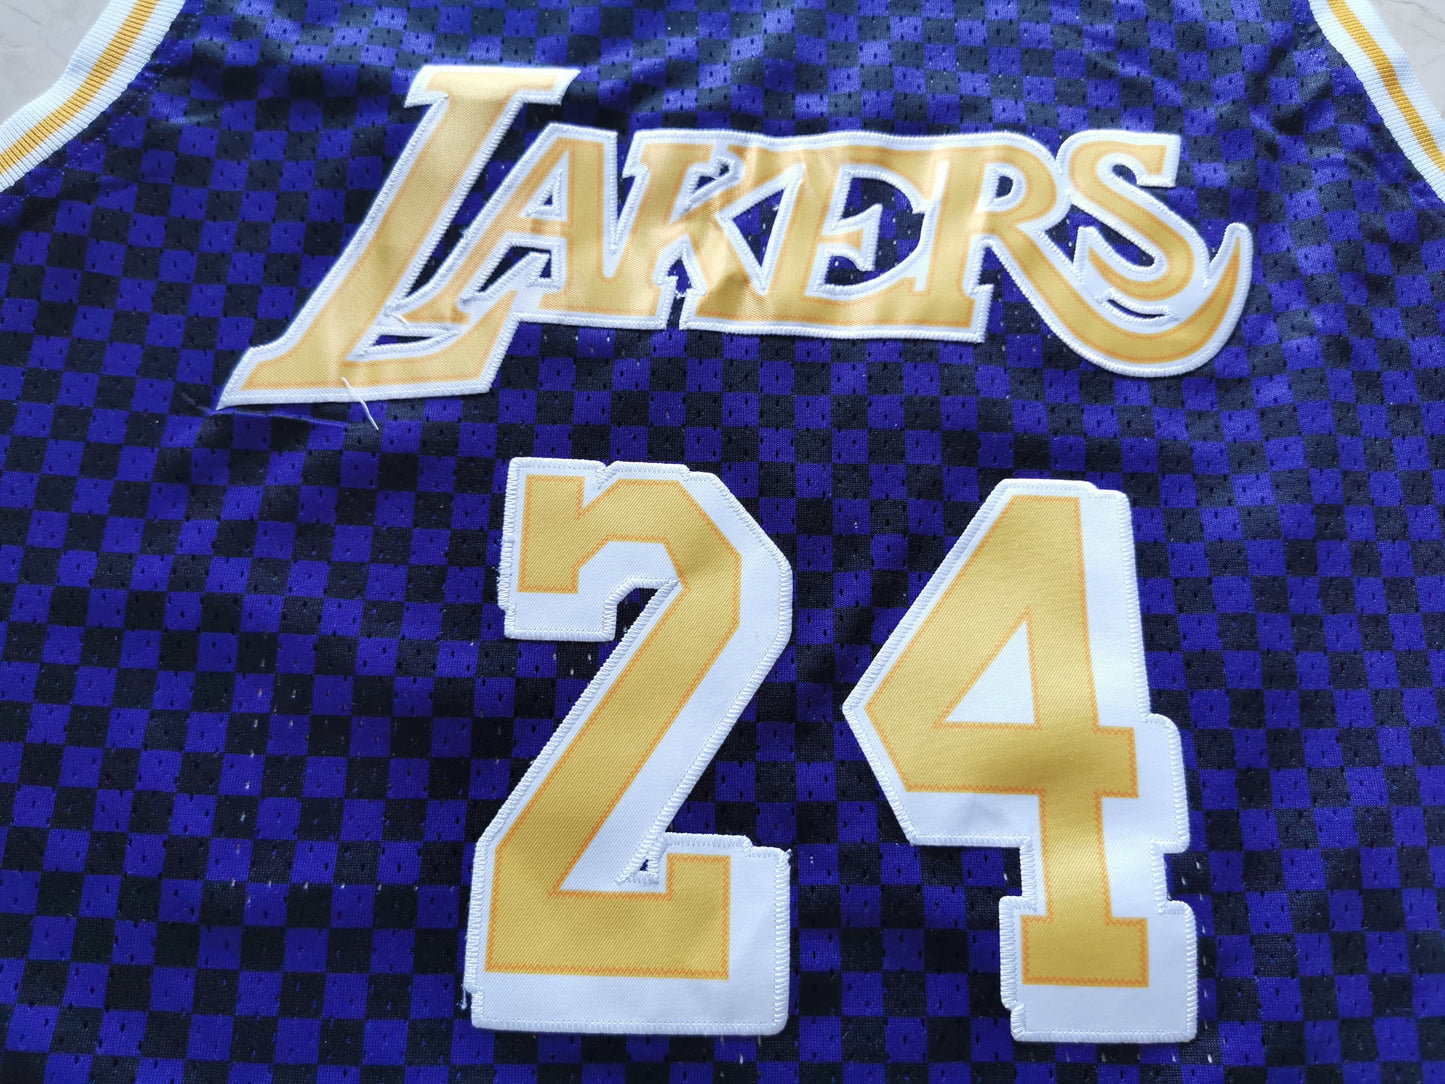 Kobe Bryant Los Angeles Lakers #24 NBA Classics Authentic Jersey - Retro Purple